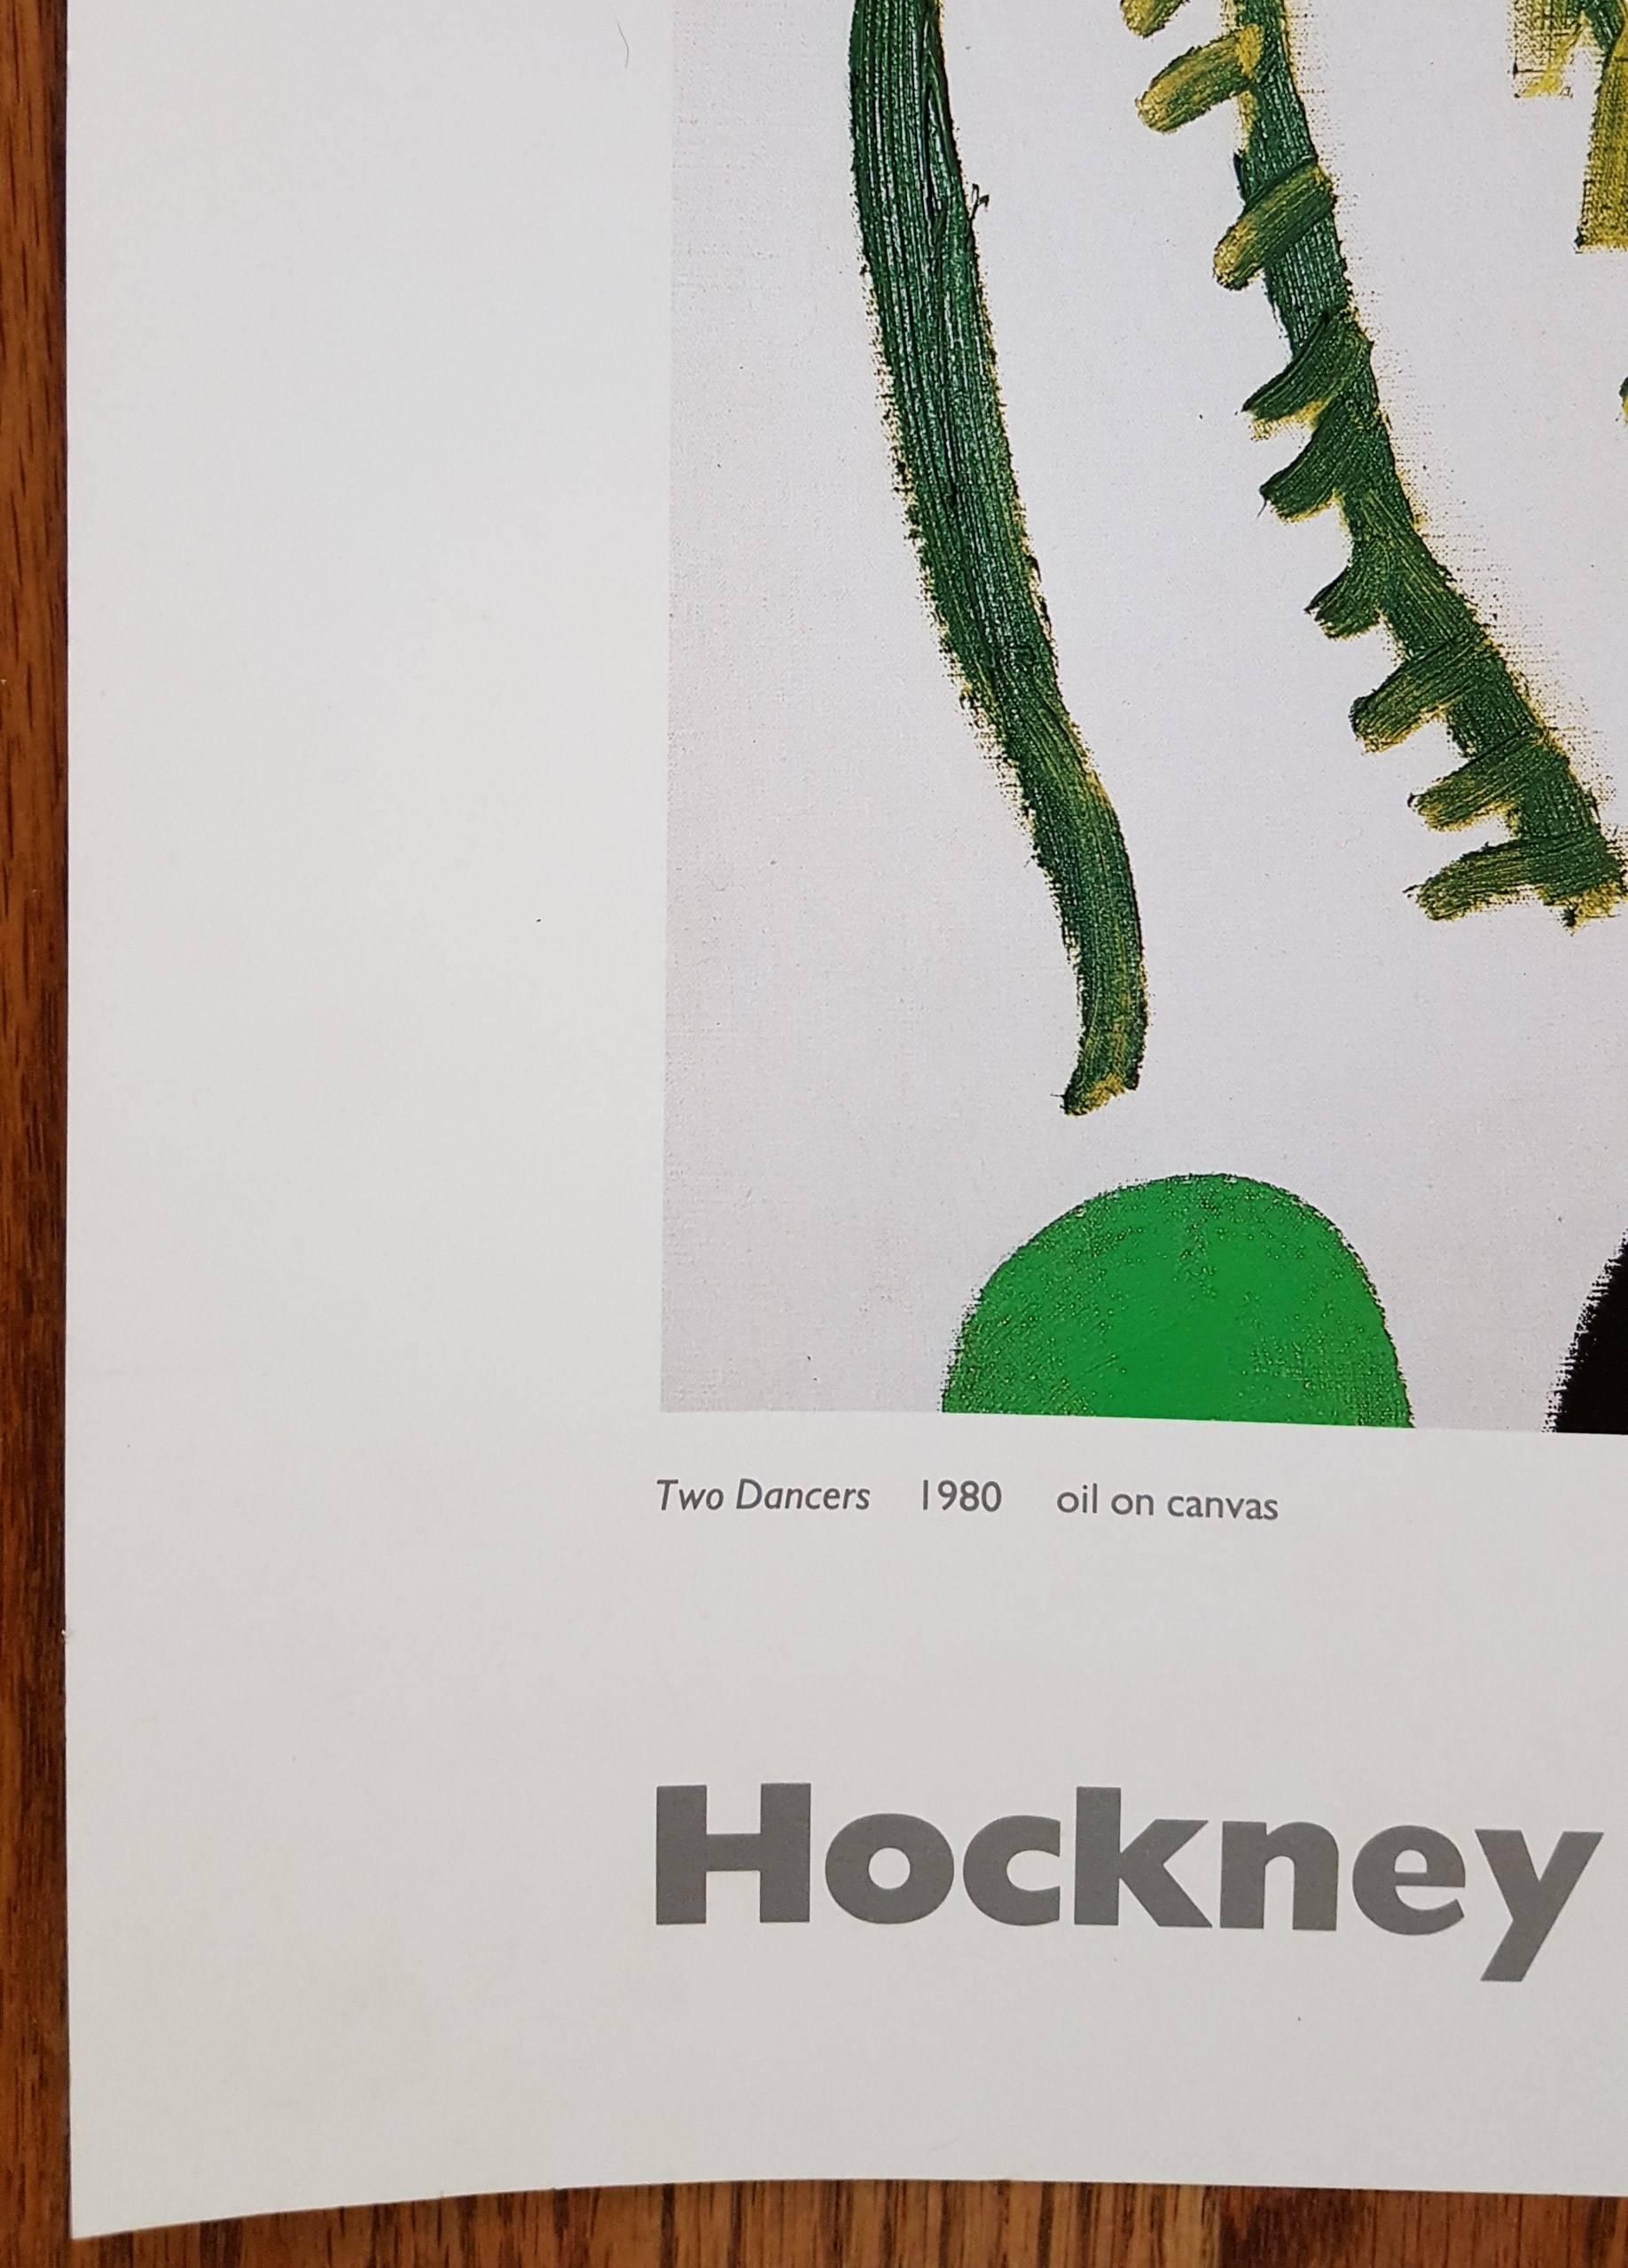 Hockney Paints the Stage: Walker Art Center - Print by (after) David Hockney